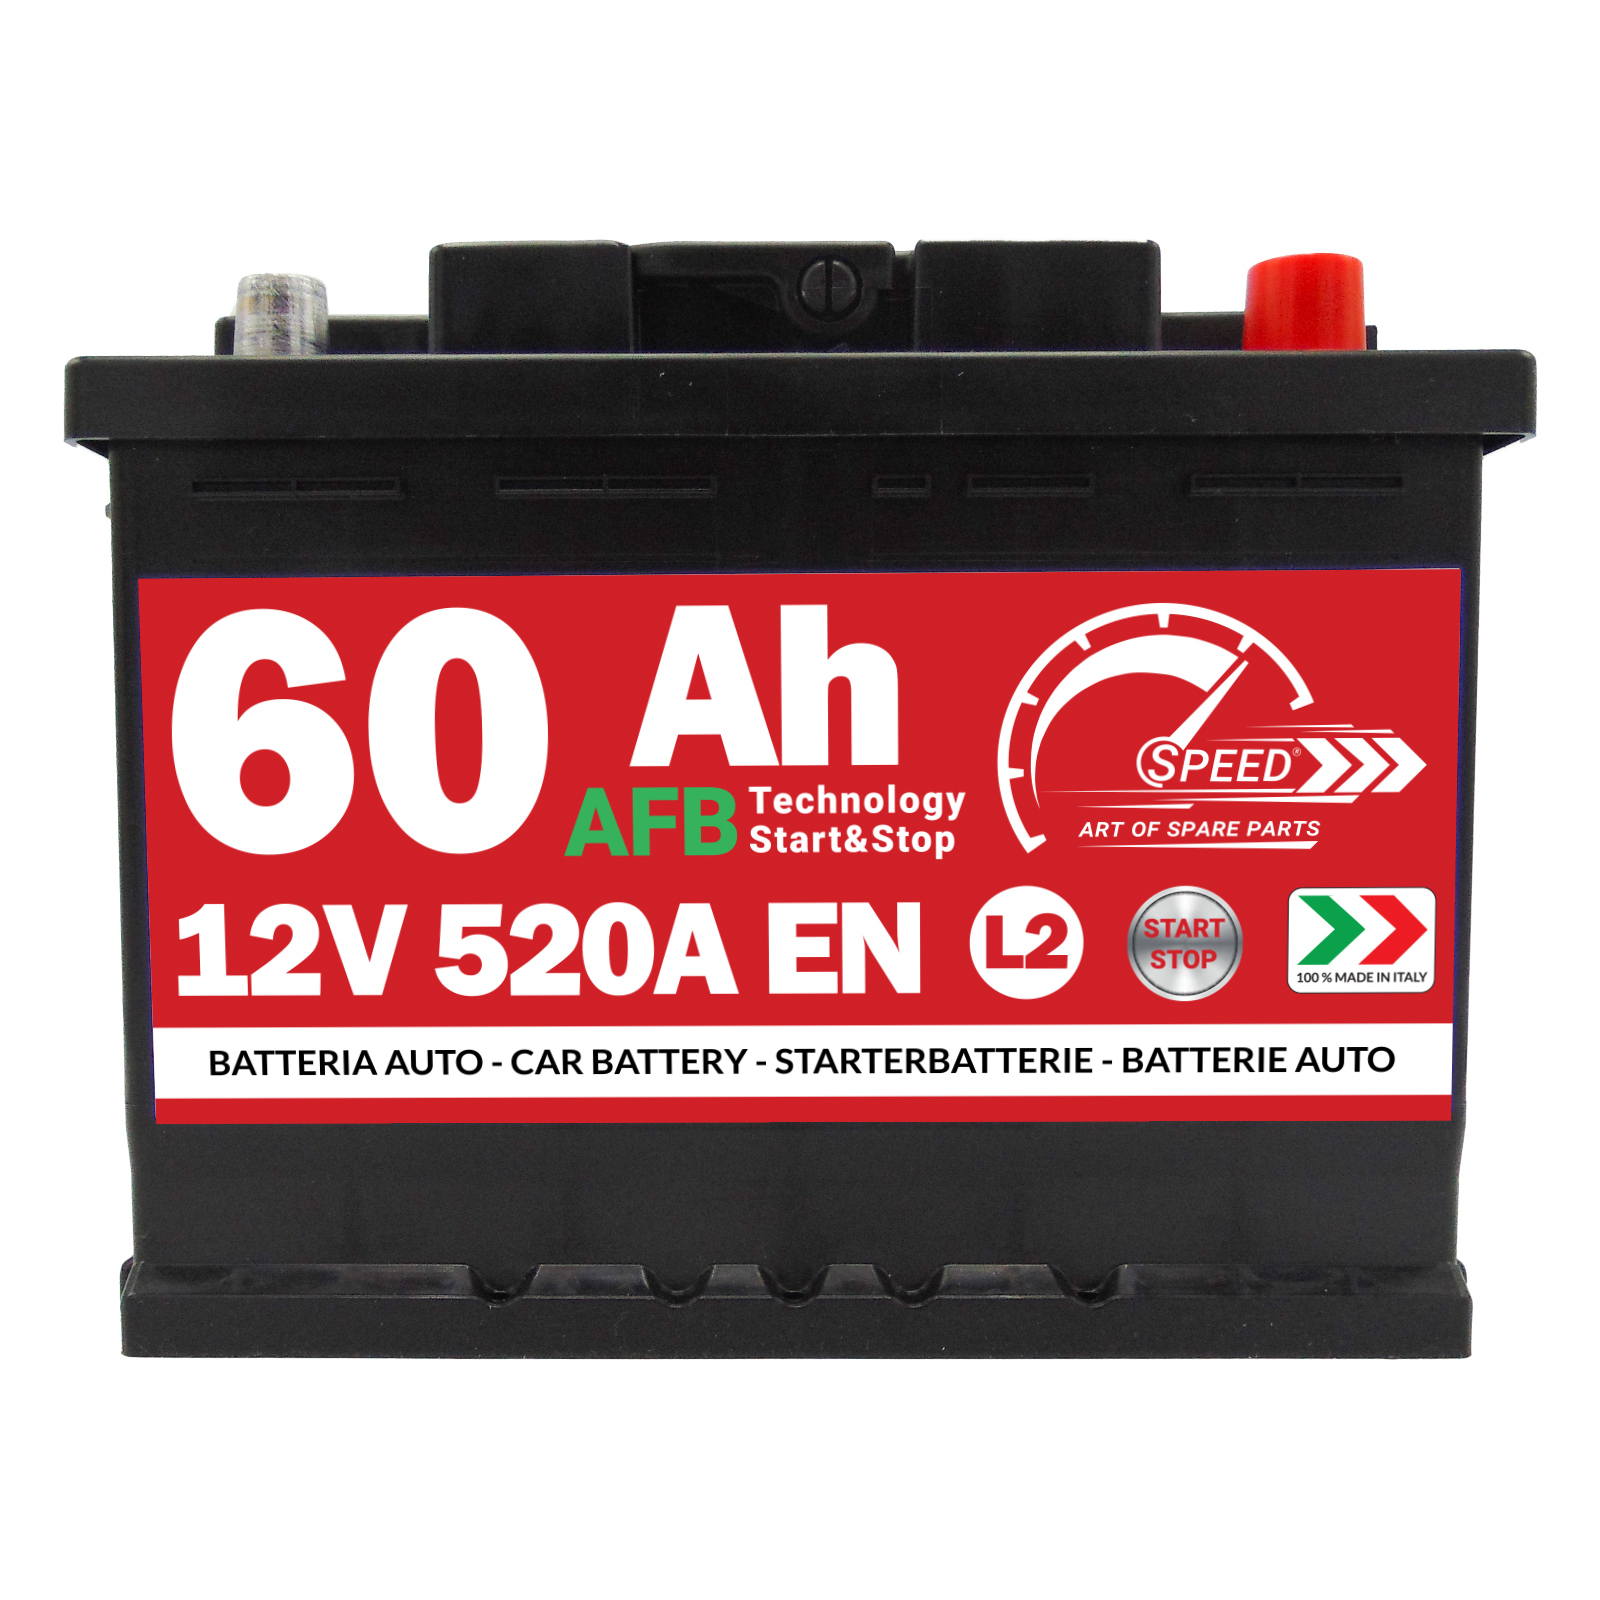 Batteria Auto Speed 60Ah 520A Start&Stop AFB - Ricambi auto SMC